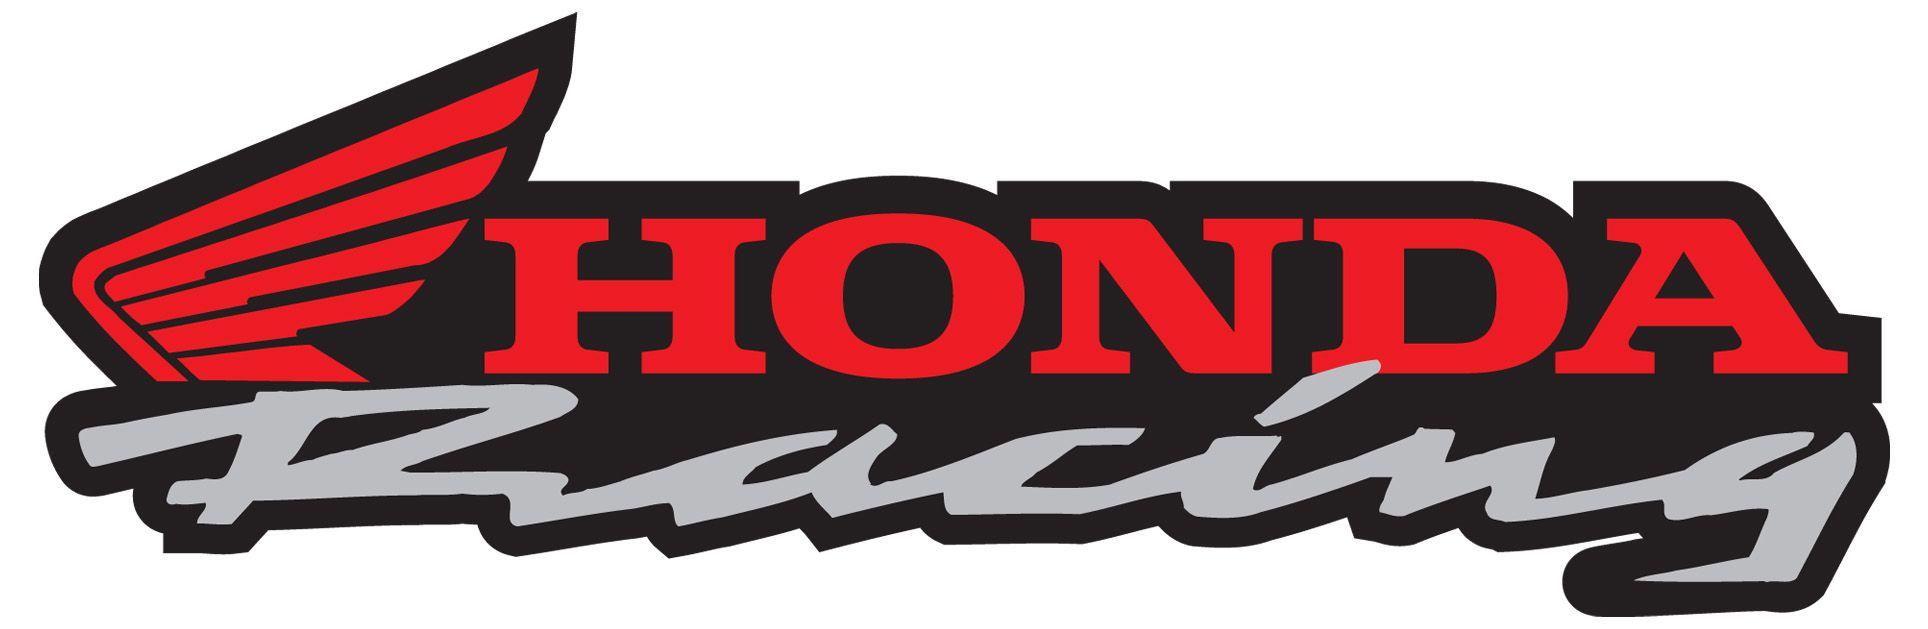 Motorcycle Racing Logo - Honda racing Logos